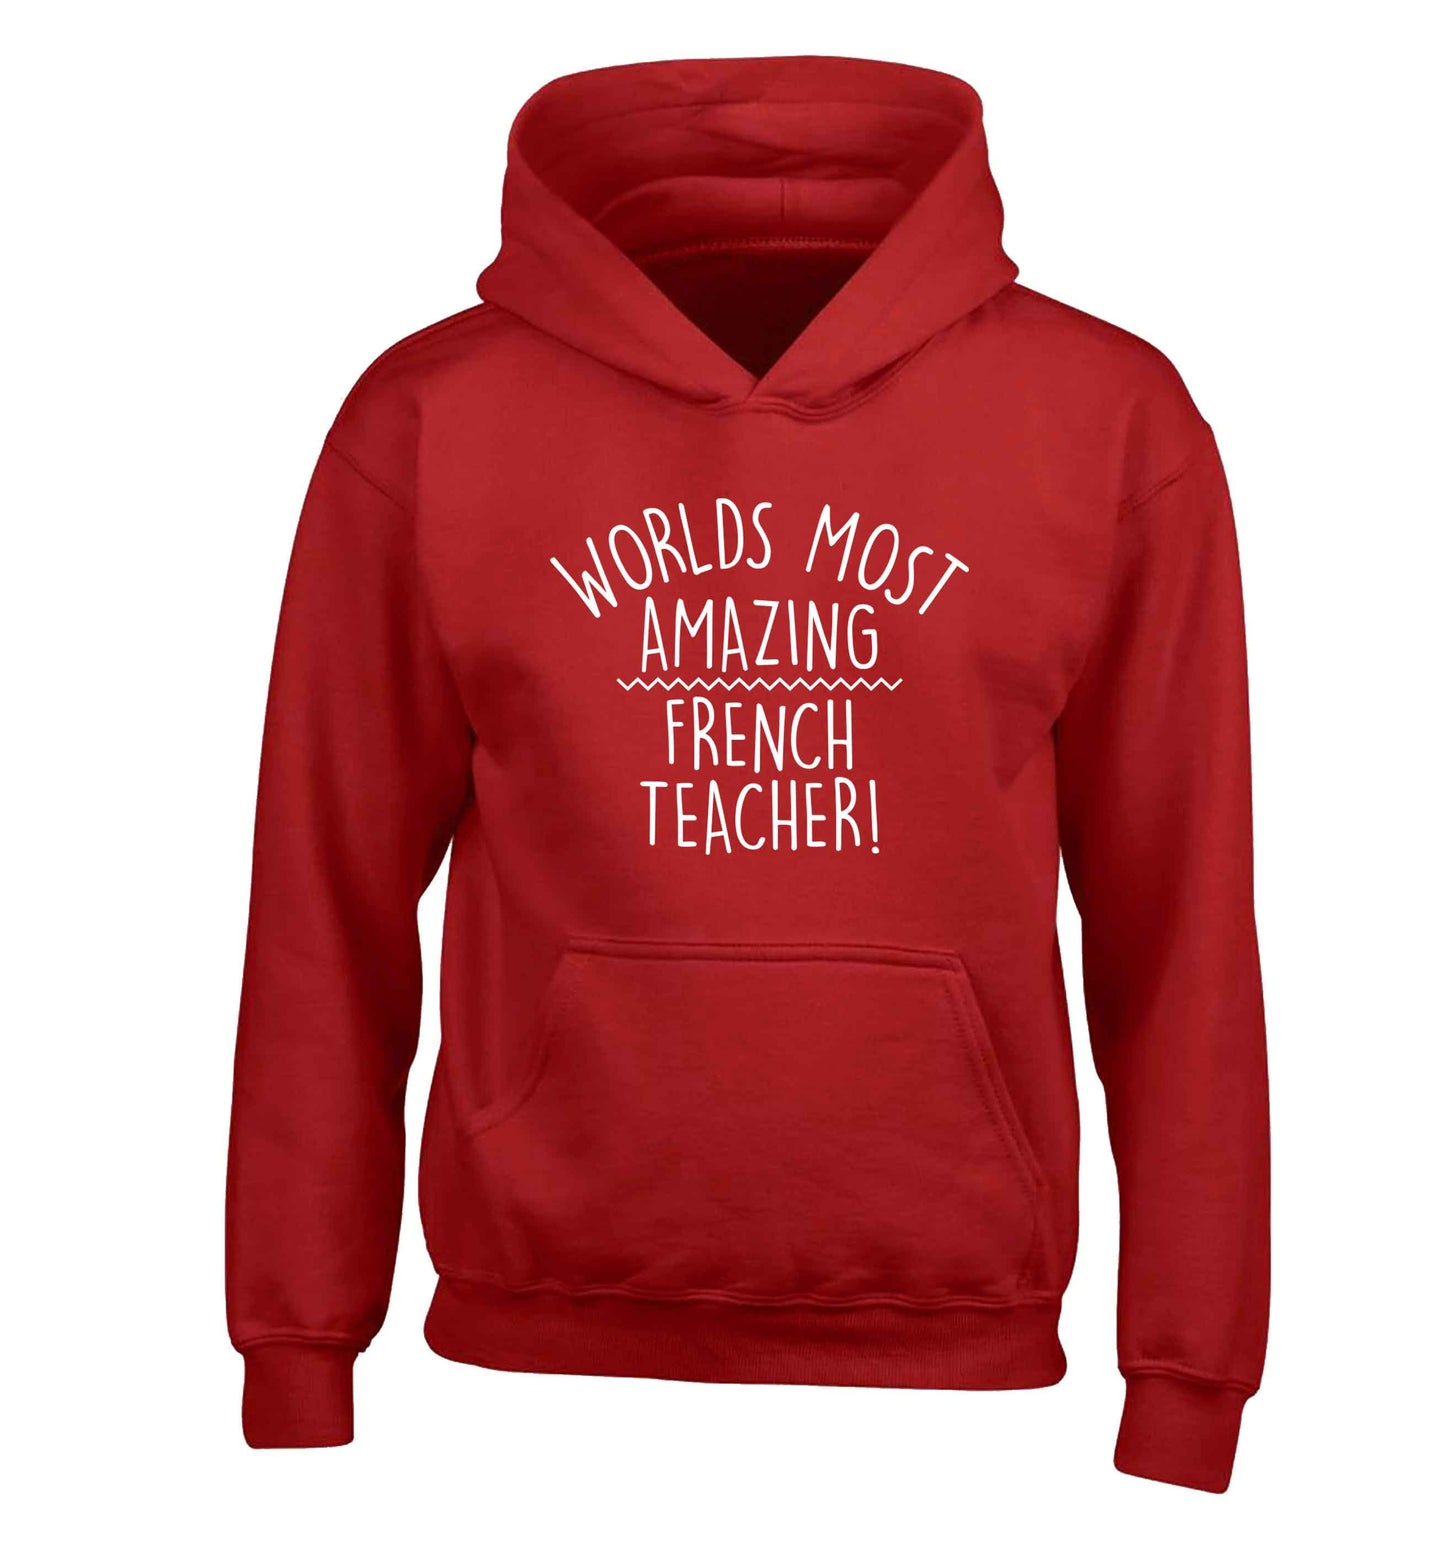 Worlds most amazing French teacher children's red hoodie 12-13 Years